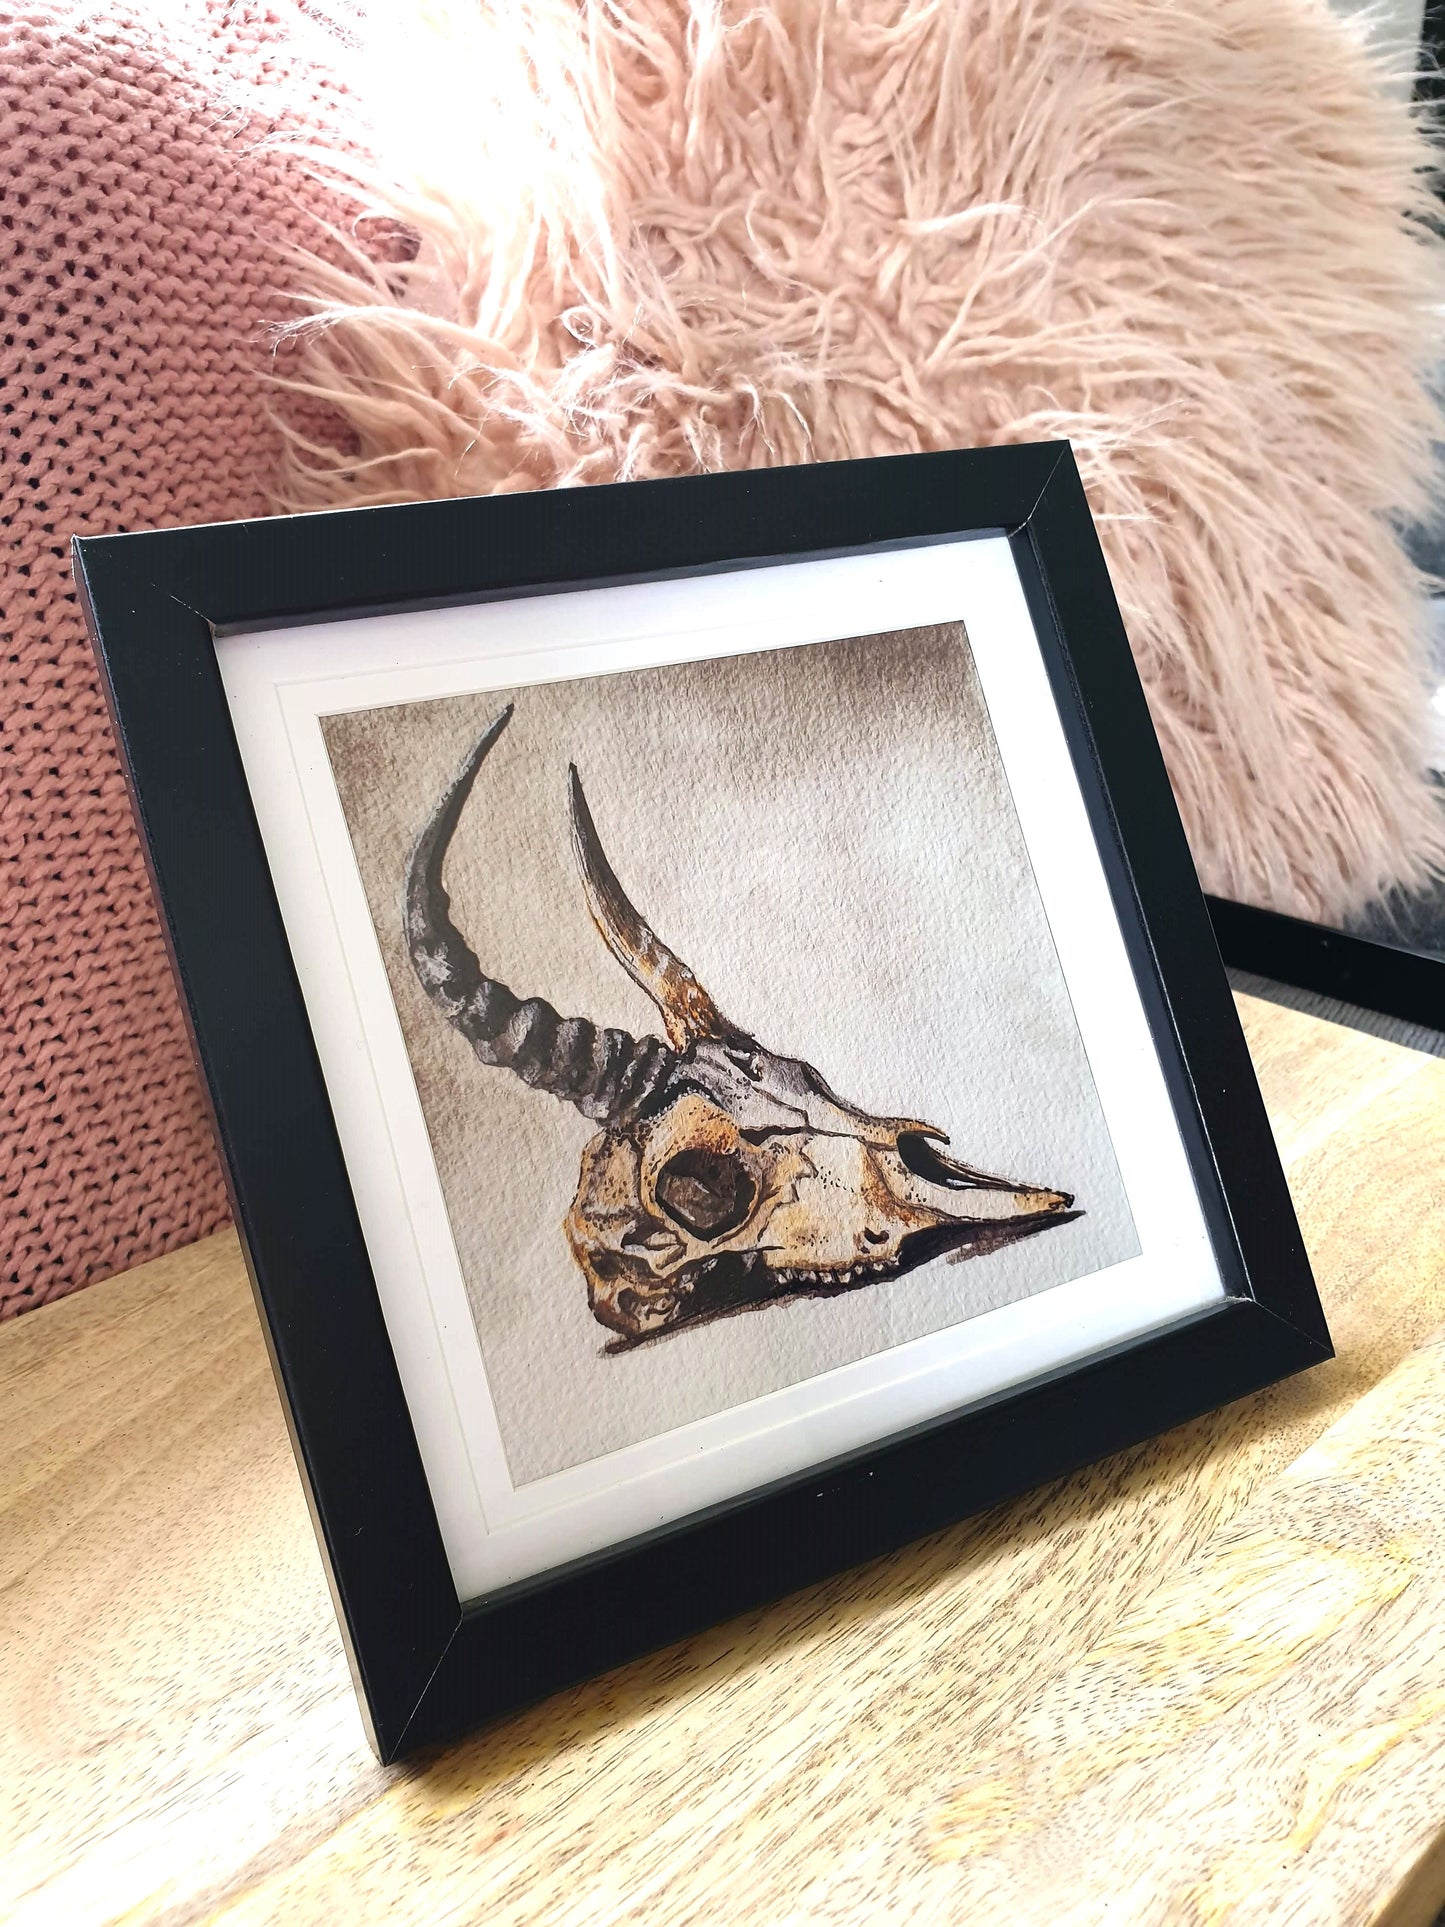 5x5 inch Glossy Print - Animal skull